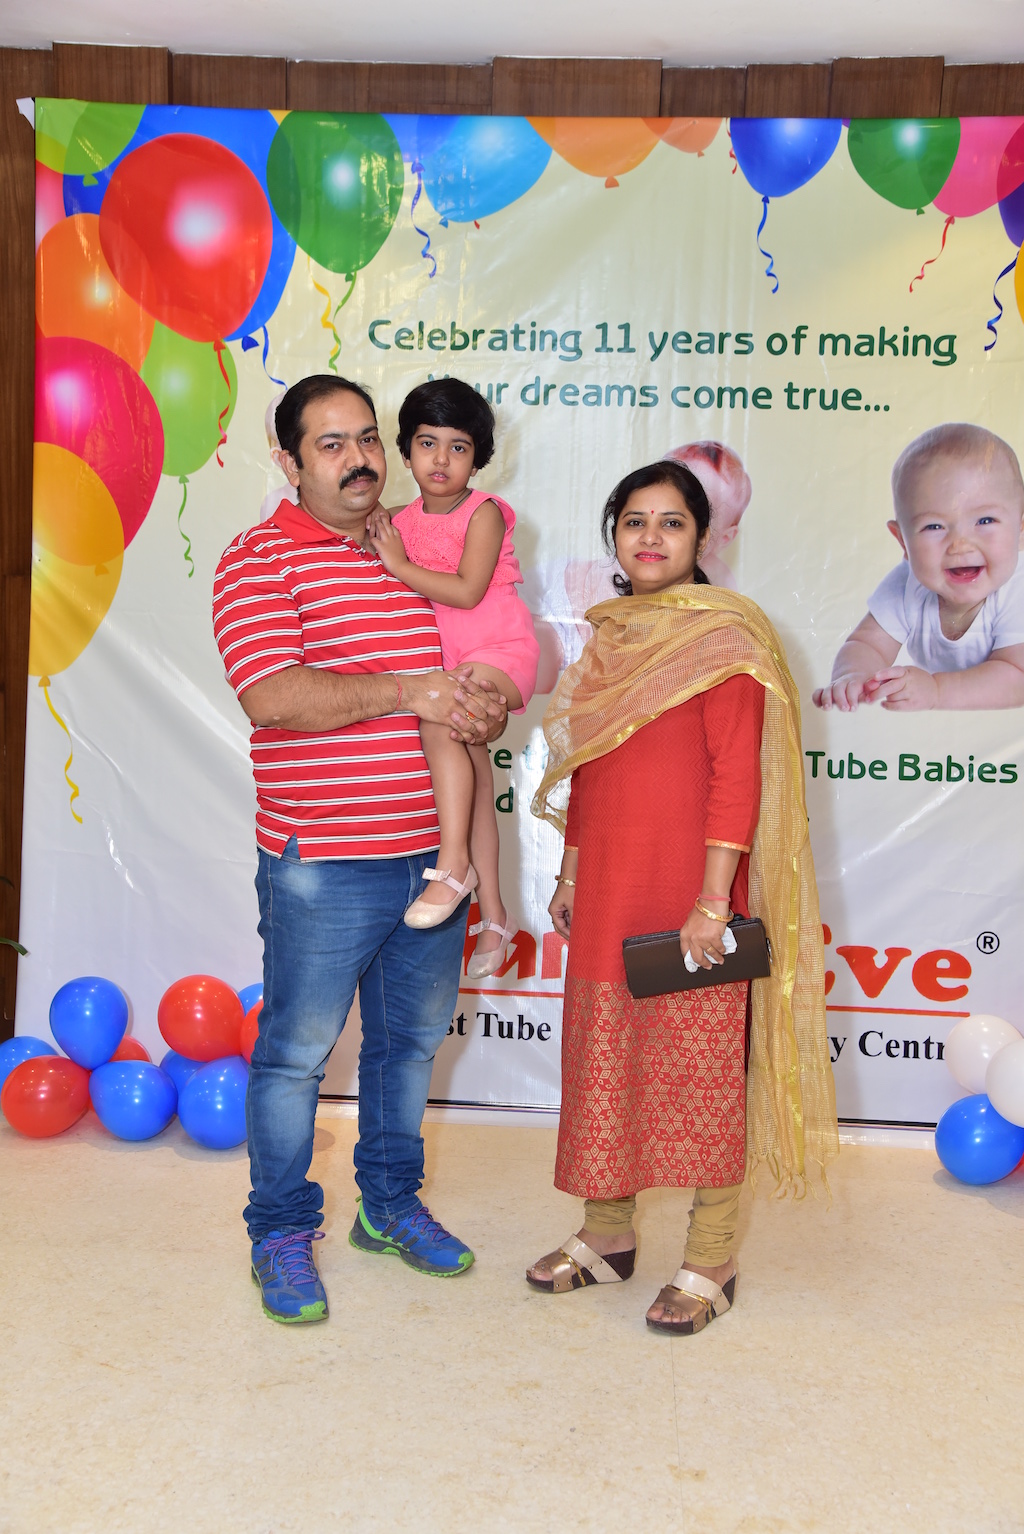 Best IVF Specialist in Noida, Test Tube Baby Center in Noida, Infertility Treatment in Noida, IVF Centre in Noida, Fertility Centre in Noida, IVF Doctor in Noida, IVF Fertility Centre in Noida